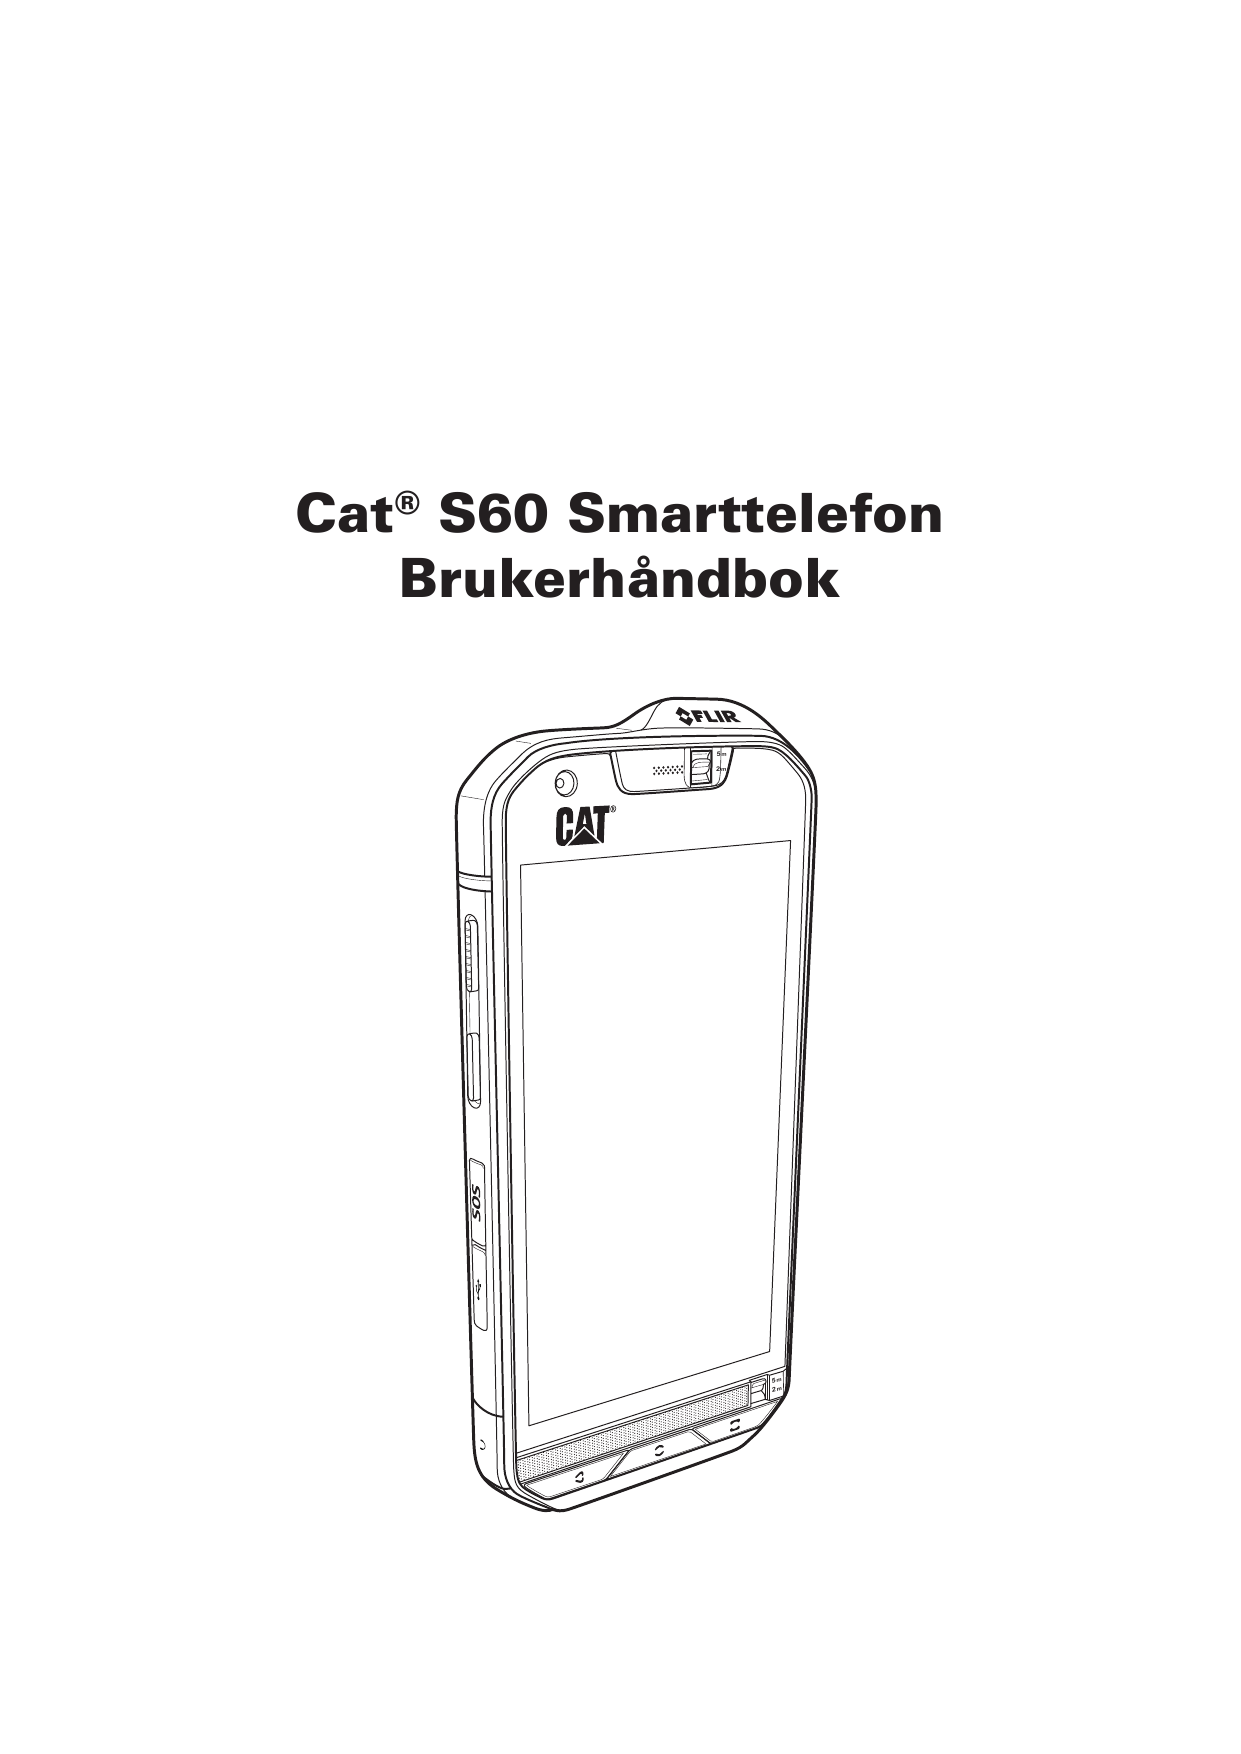 Cat® S60 SmarttelefonBrukerhåndbok5m2m5m2m